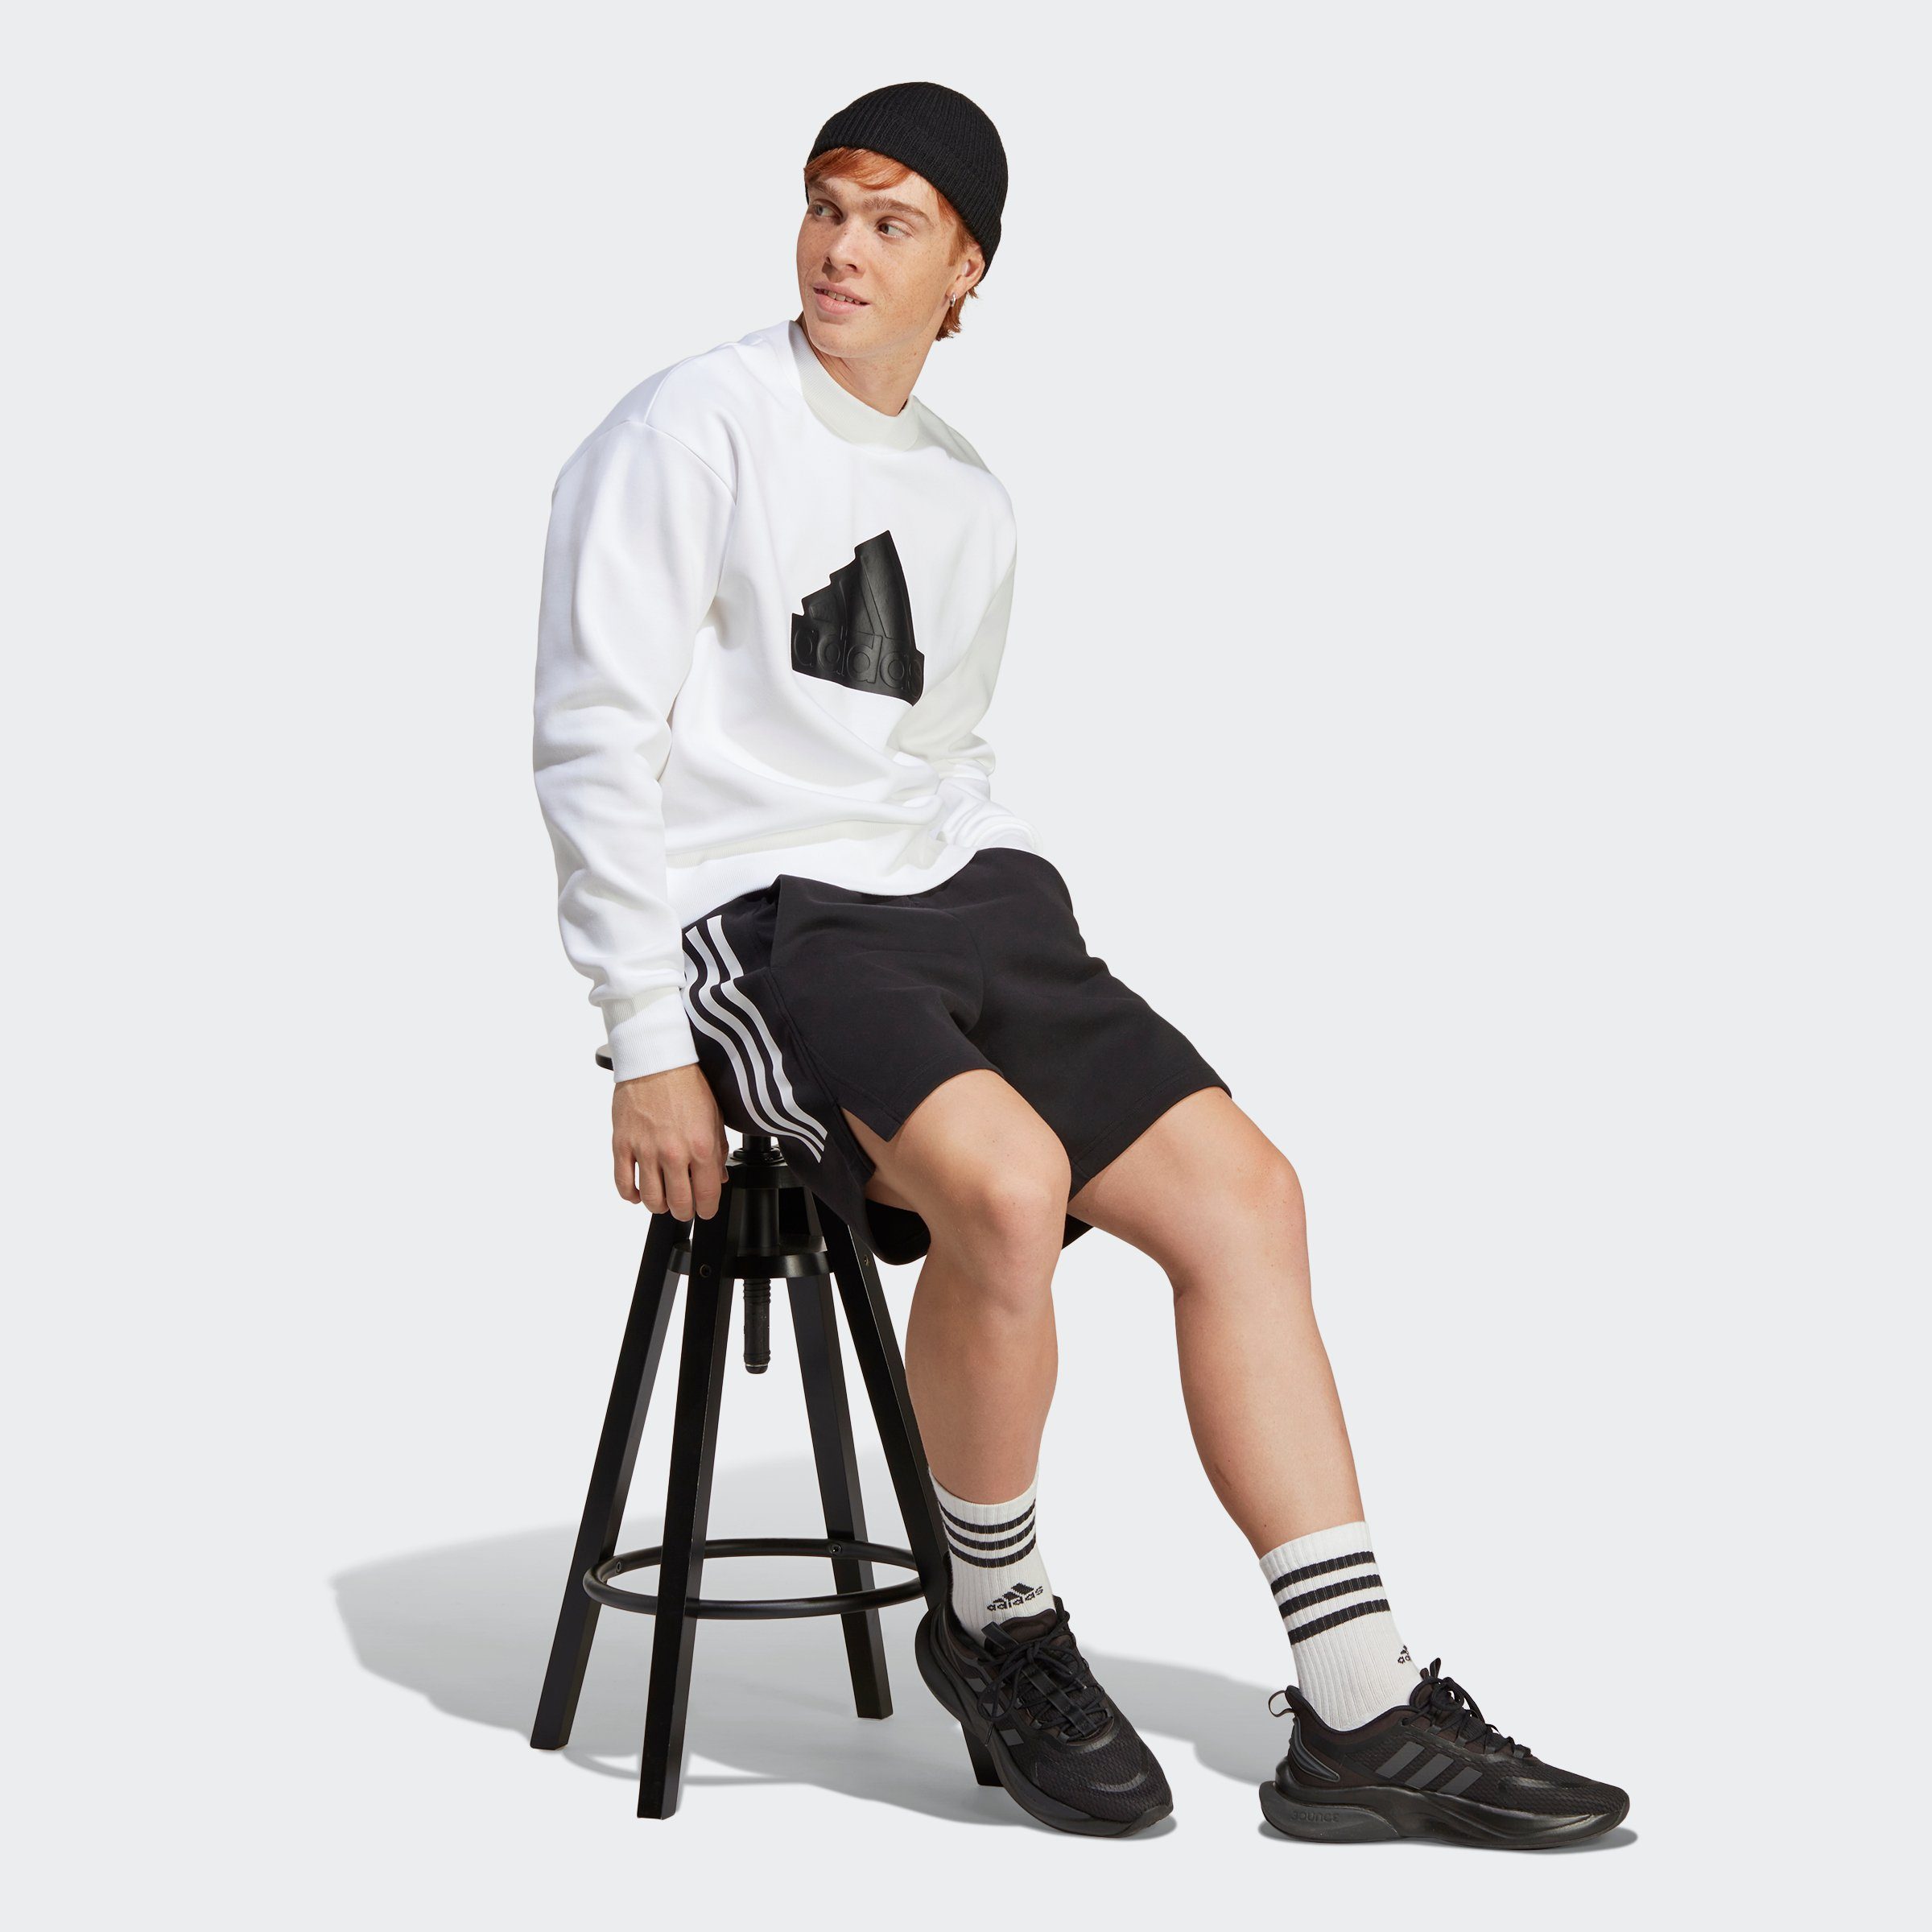 FUTURE SPORT OF White Sportswear Sweatshirt Black ICONS adidas BADGE /